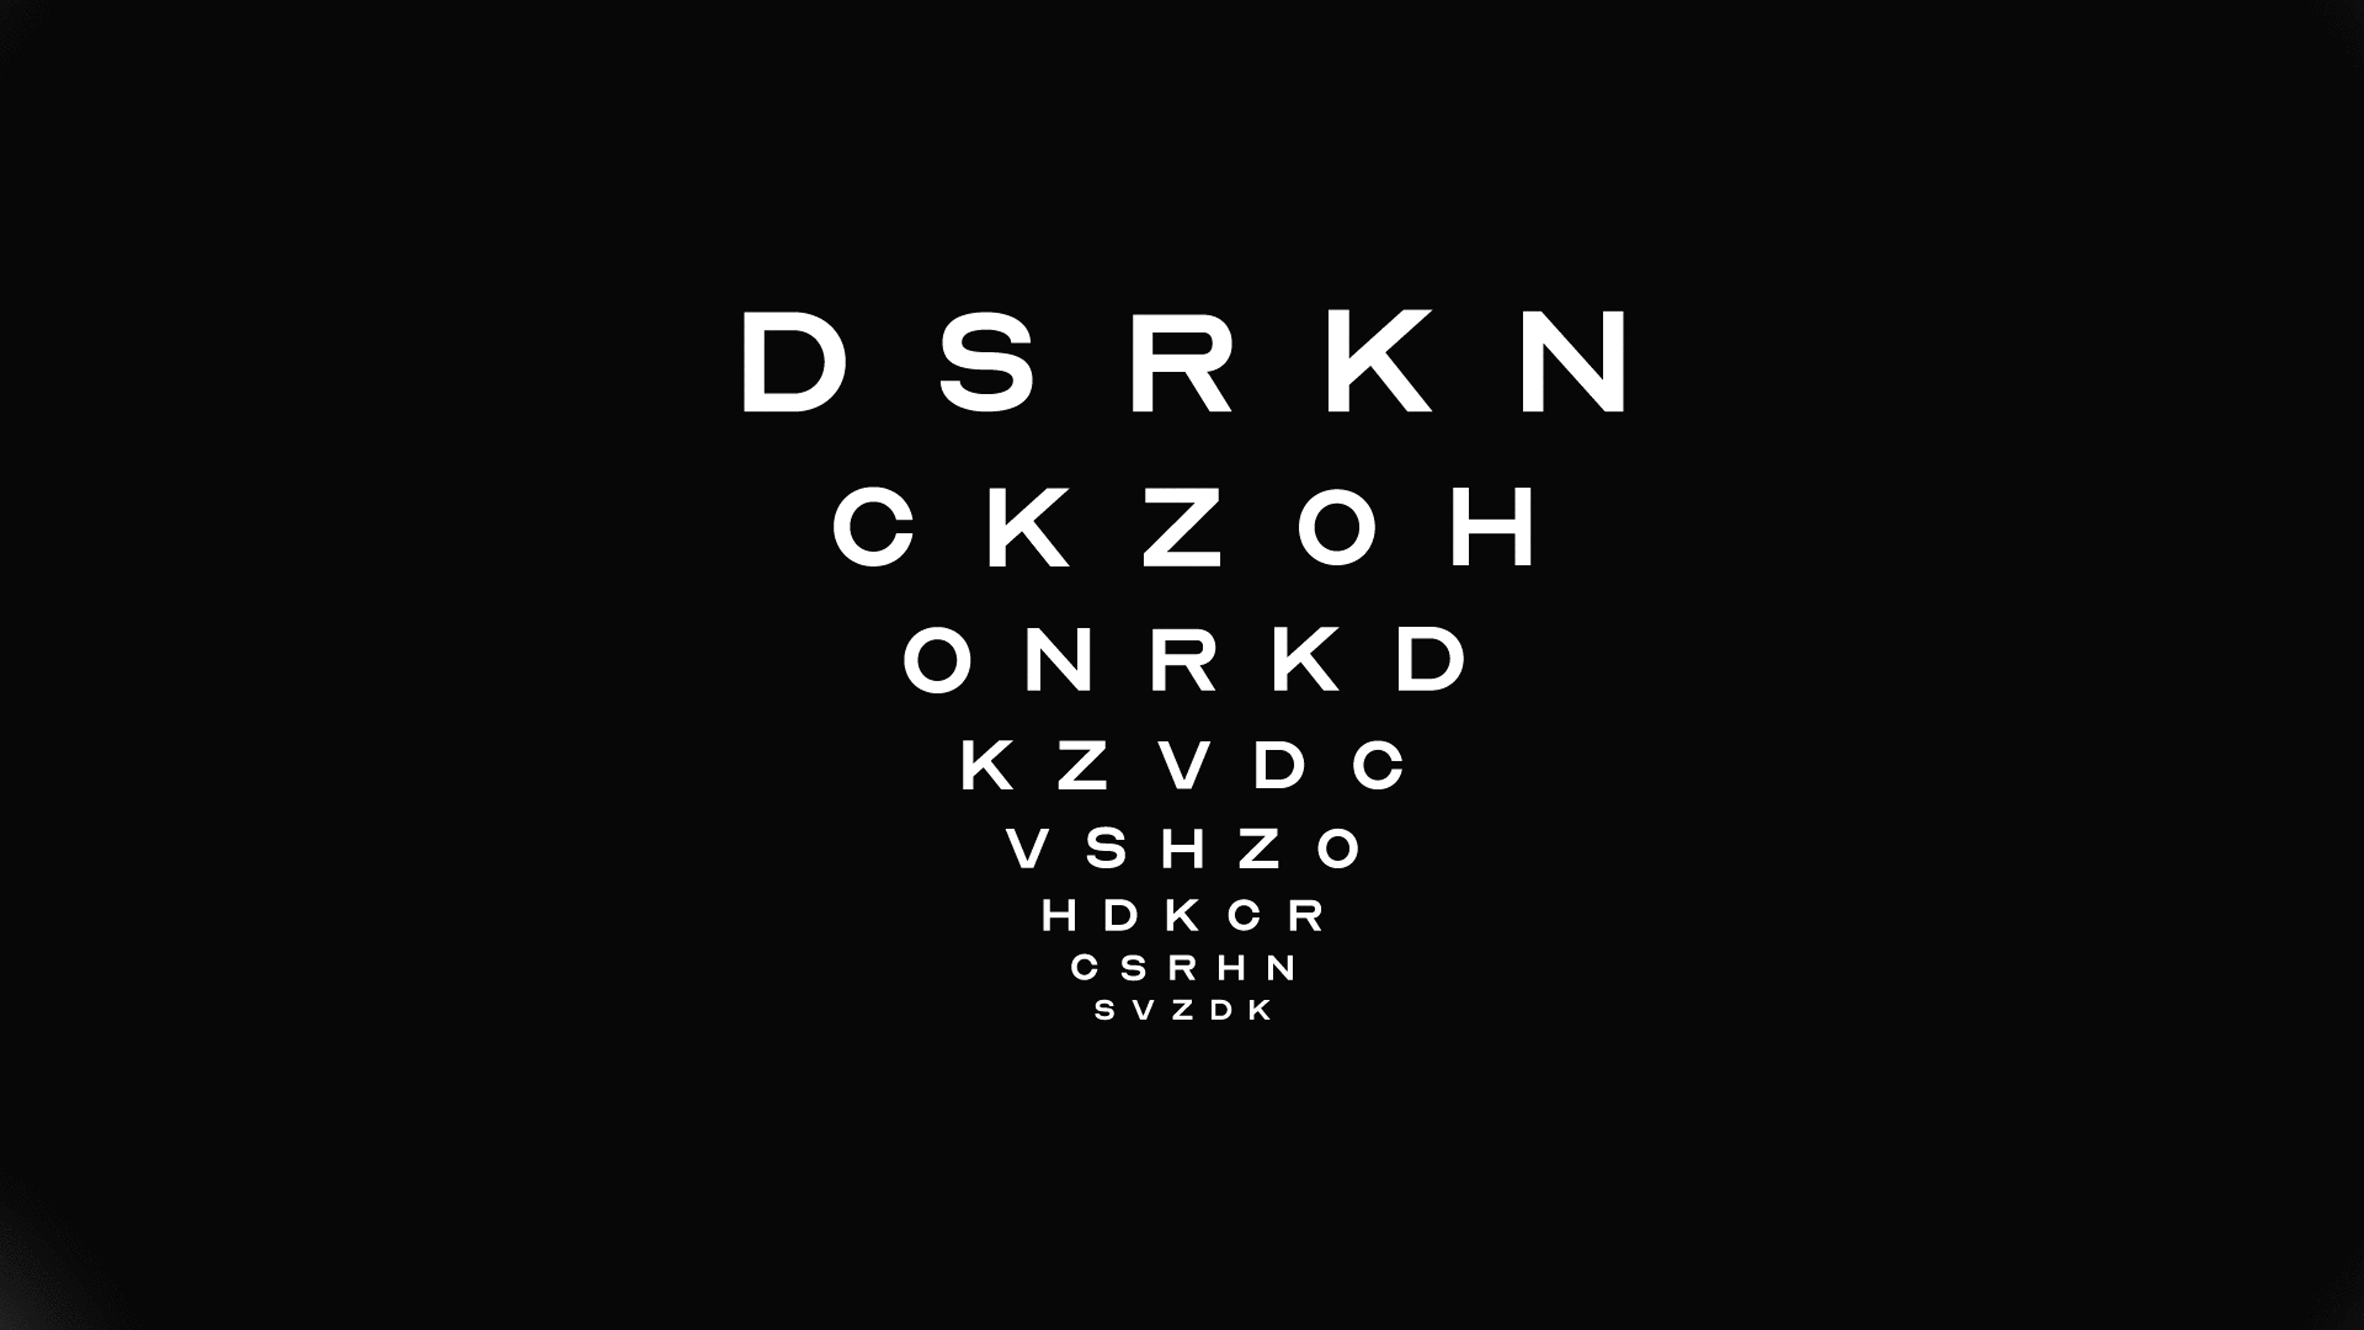 Optician Sans font